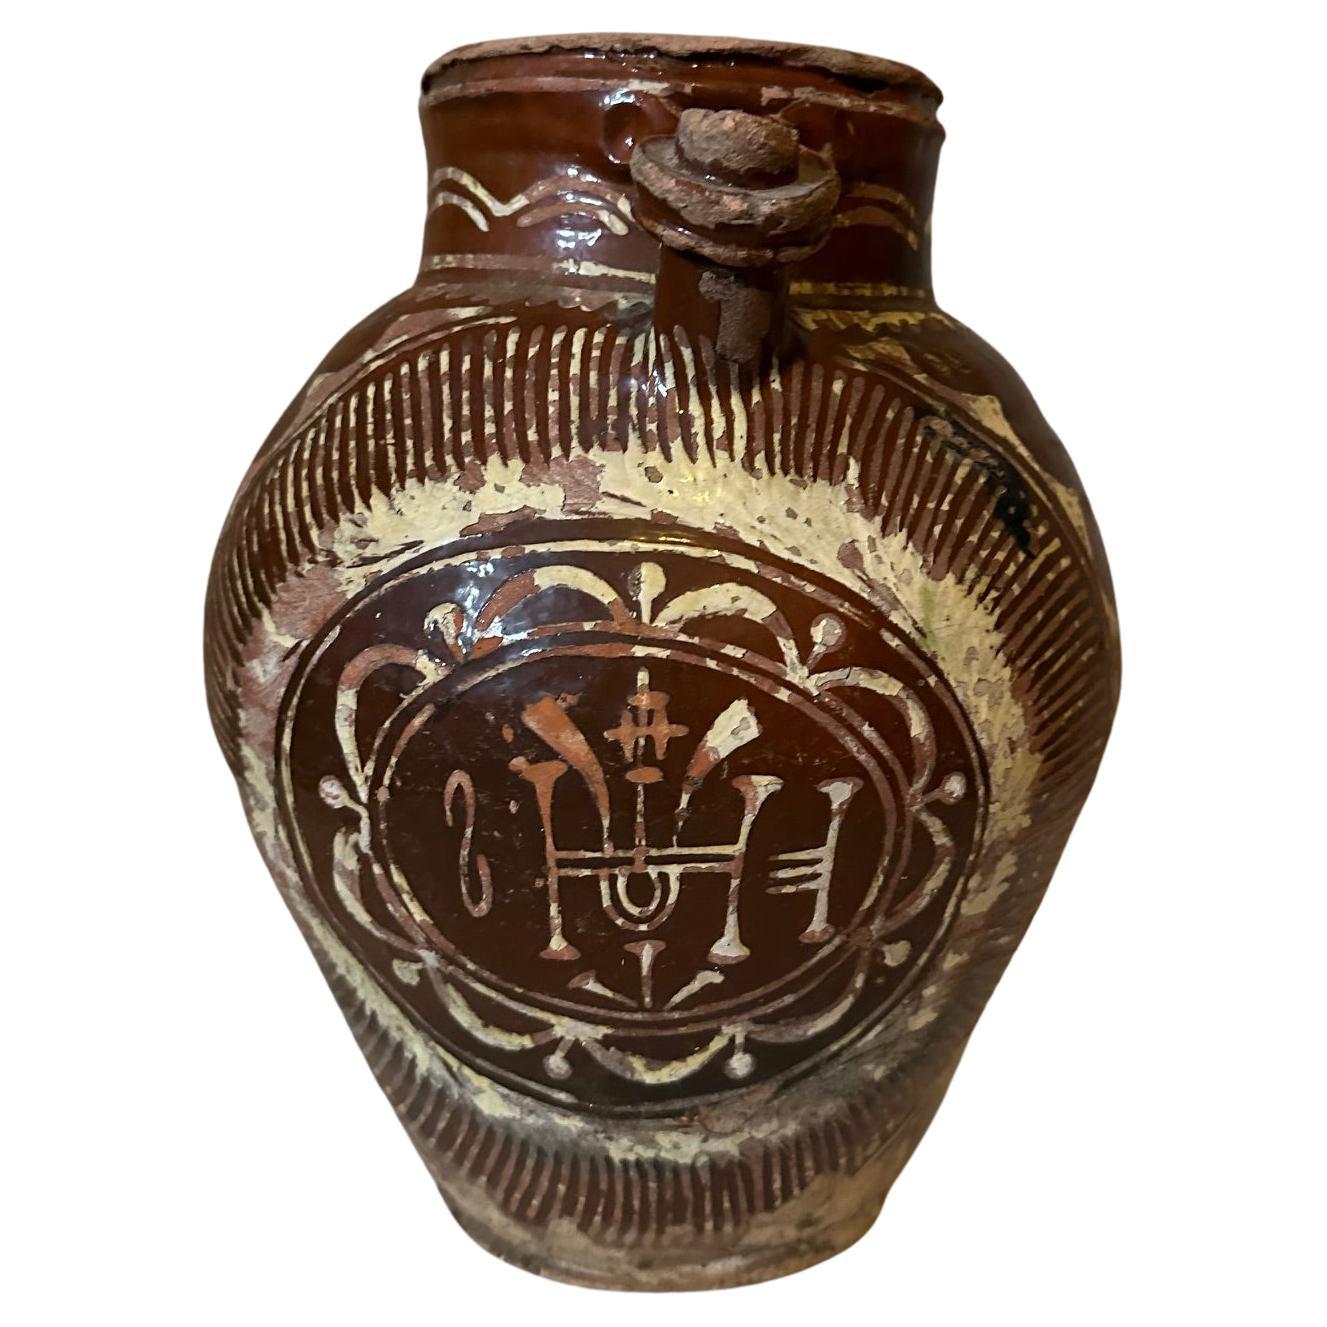 19th century French Terracotta Oil Jar